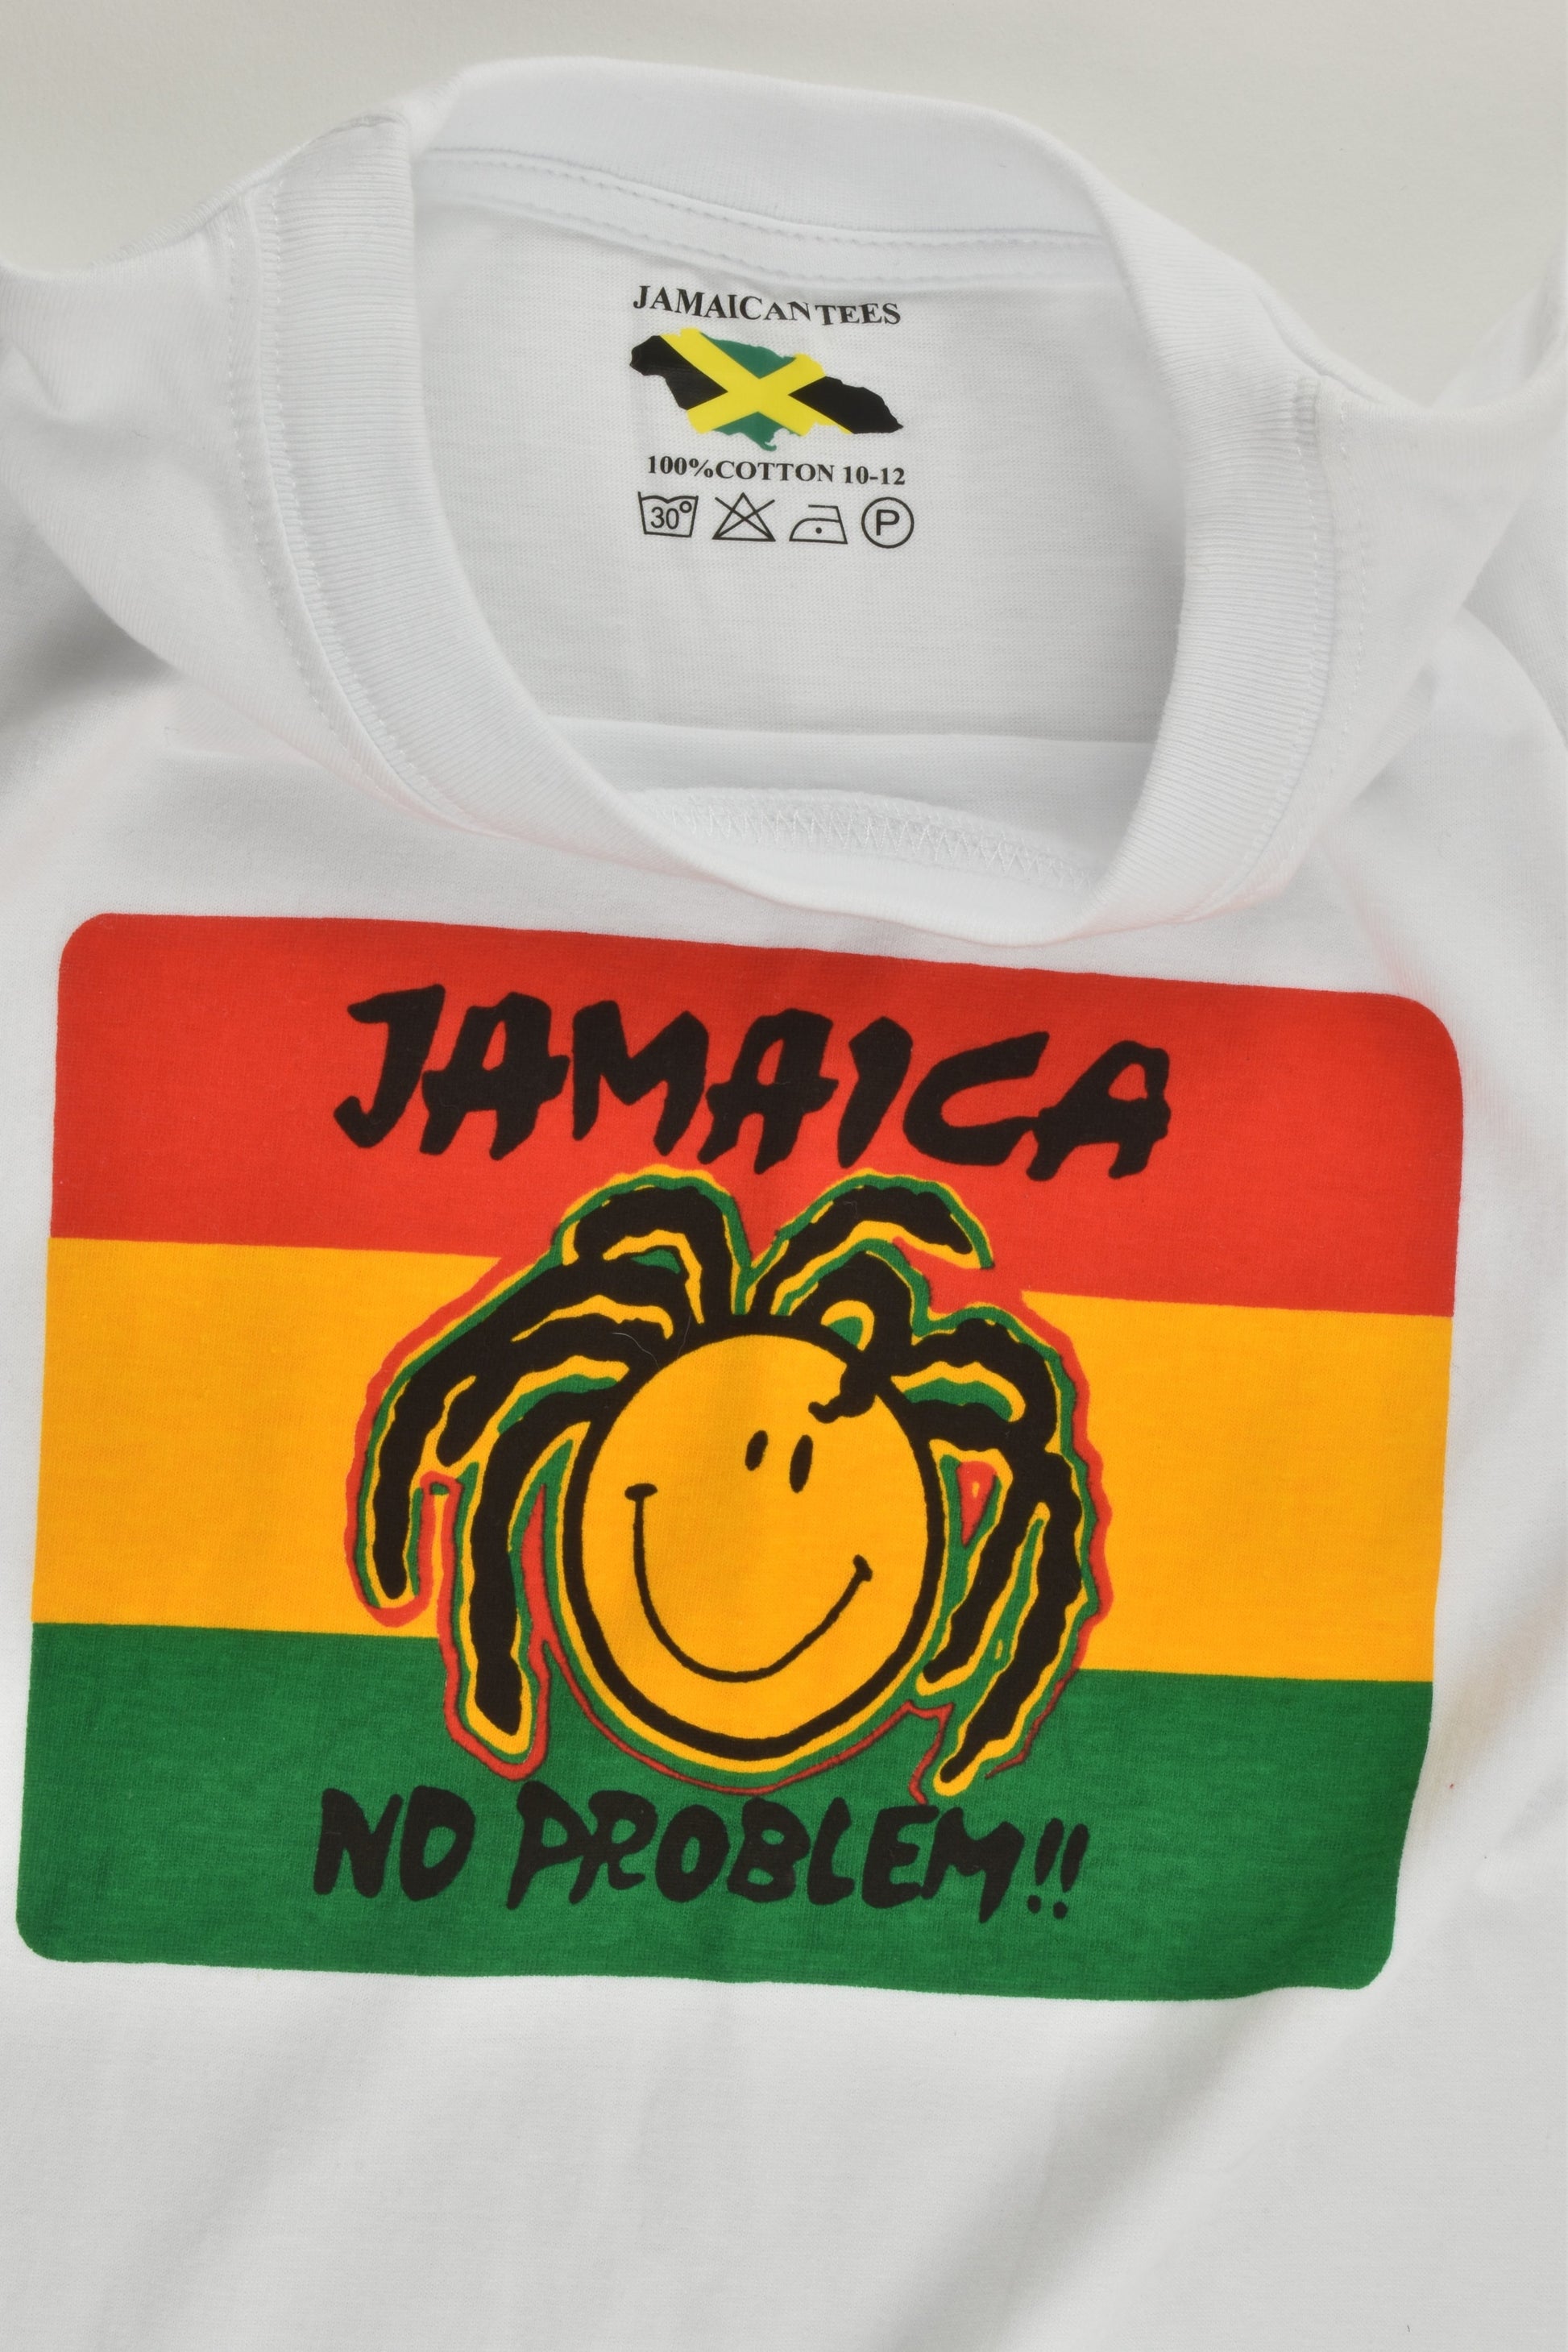 NEW Jamaican Tees Size 10-12 'Jamaica No Problem!' T-shirt